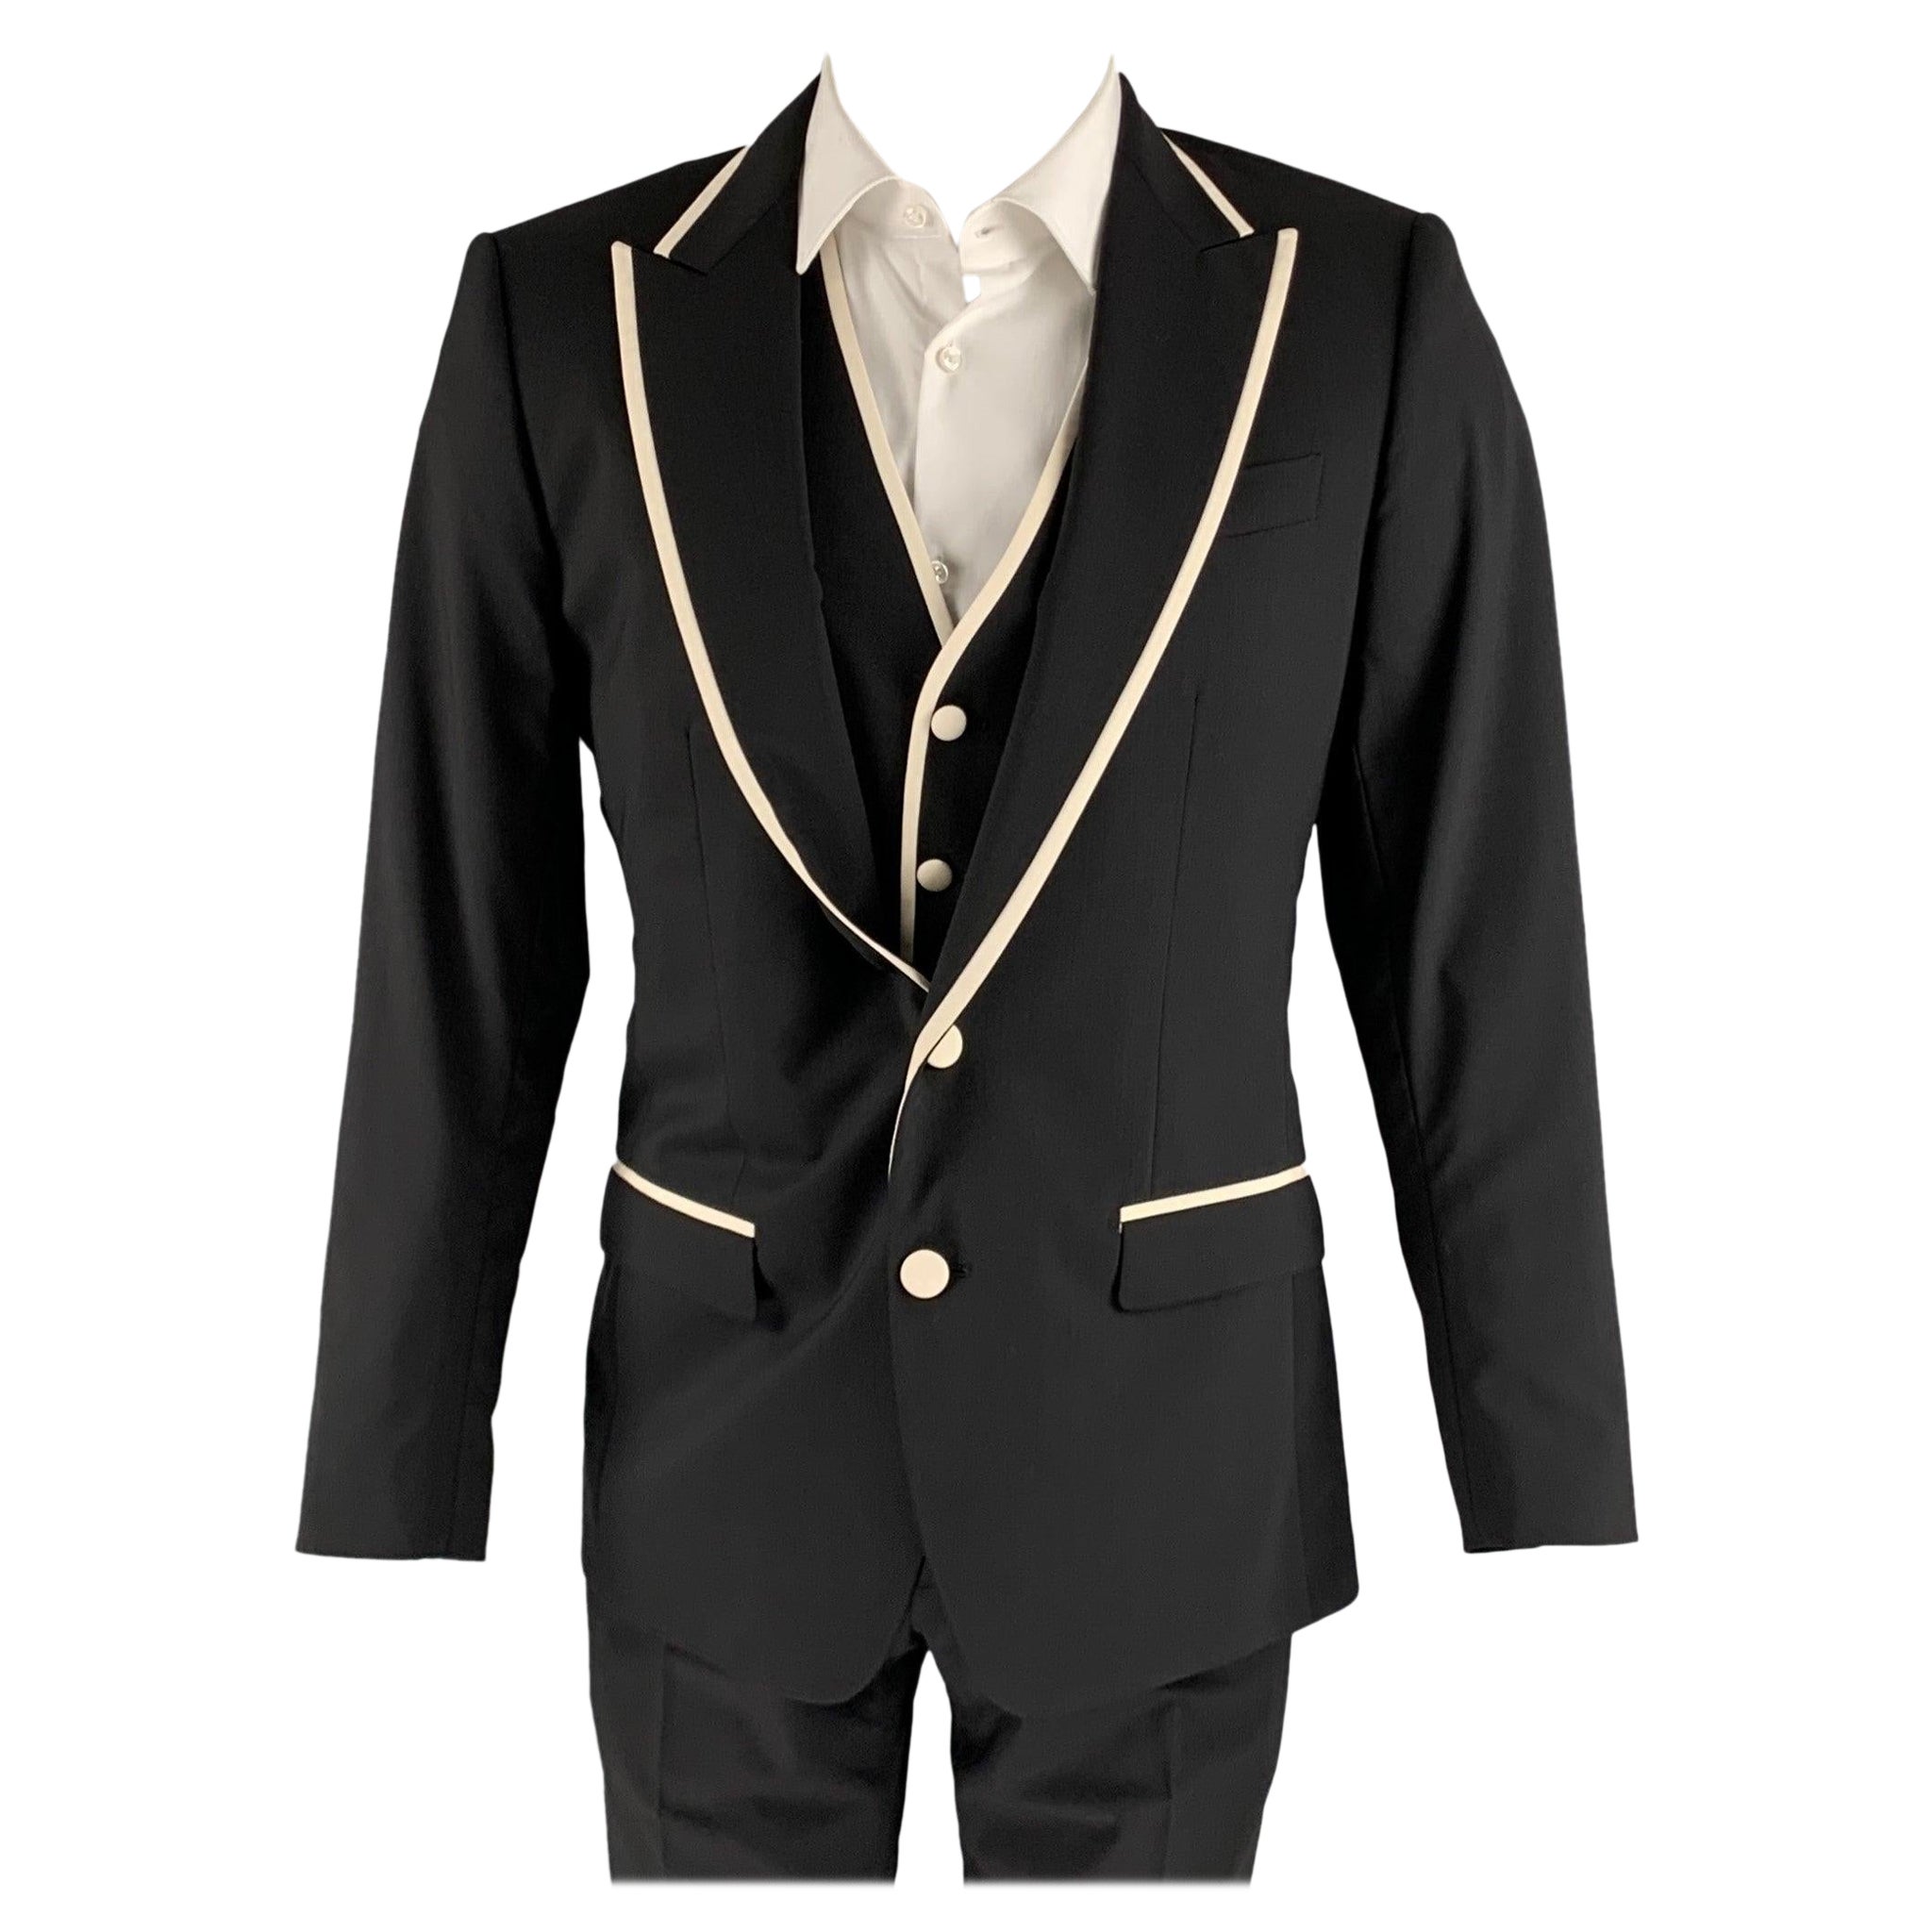 DOLCE & GABBANA Chest Size 38 Black White Solid Wool Blend Peak Lapel Suit For Sale